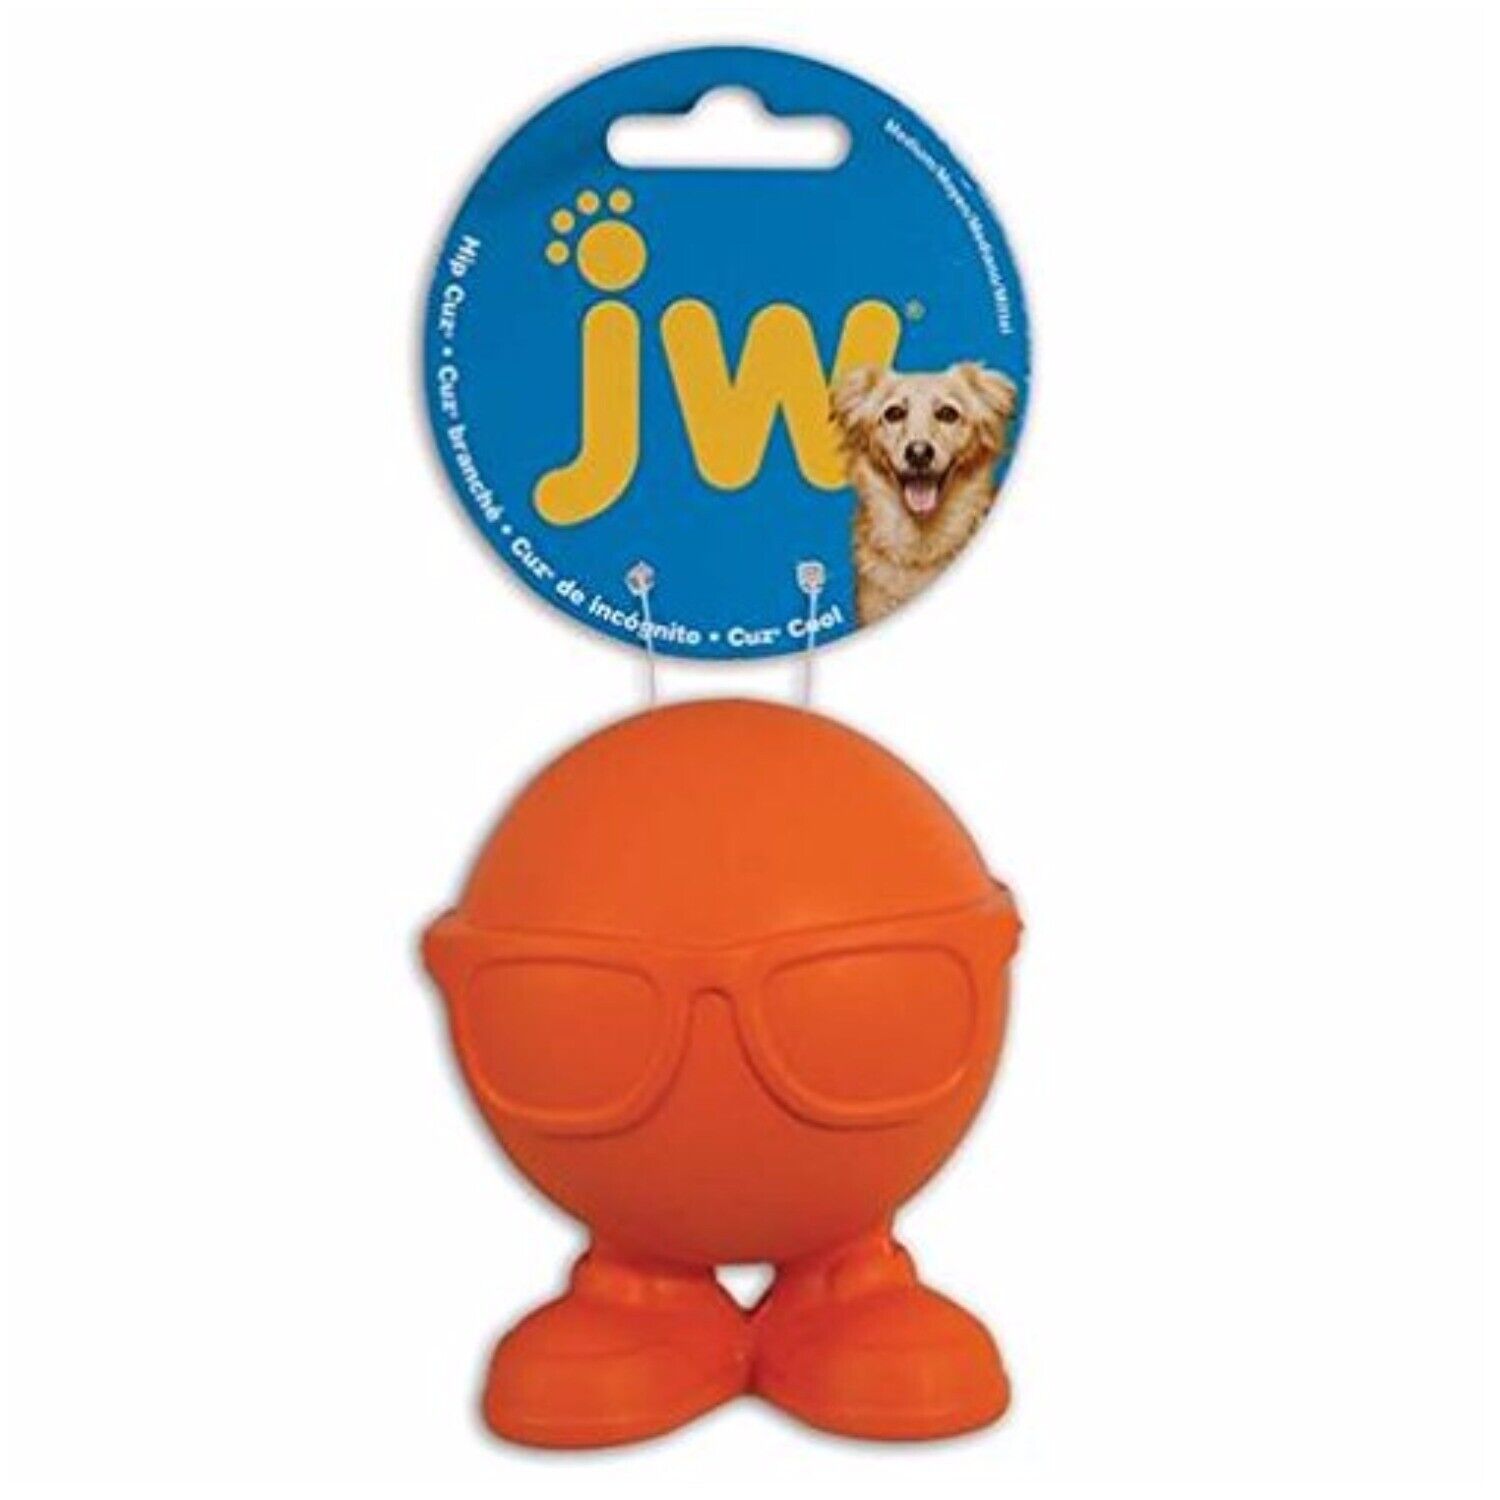 JW Hipster Cuz Assistant Erratic Bounce Rubber Ball Durable Dog Toy Medium